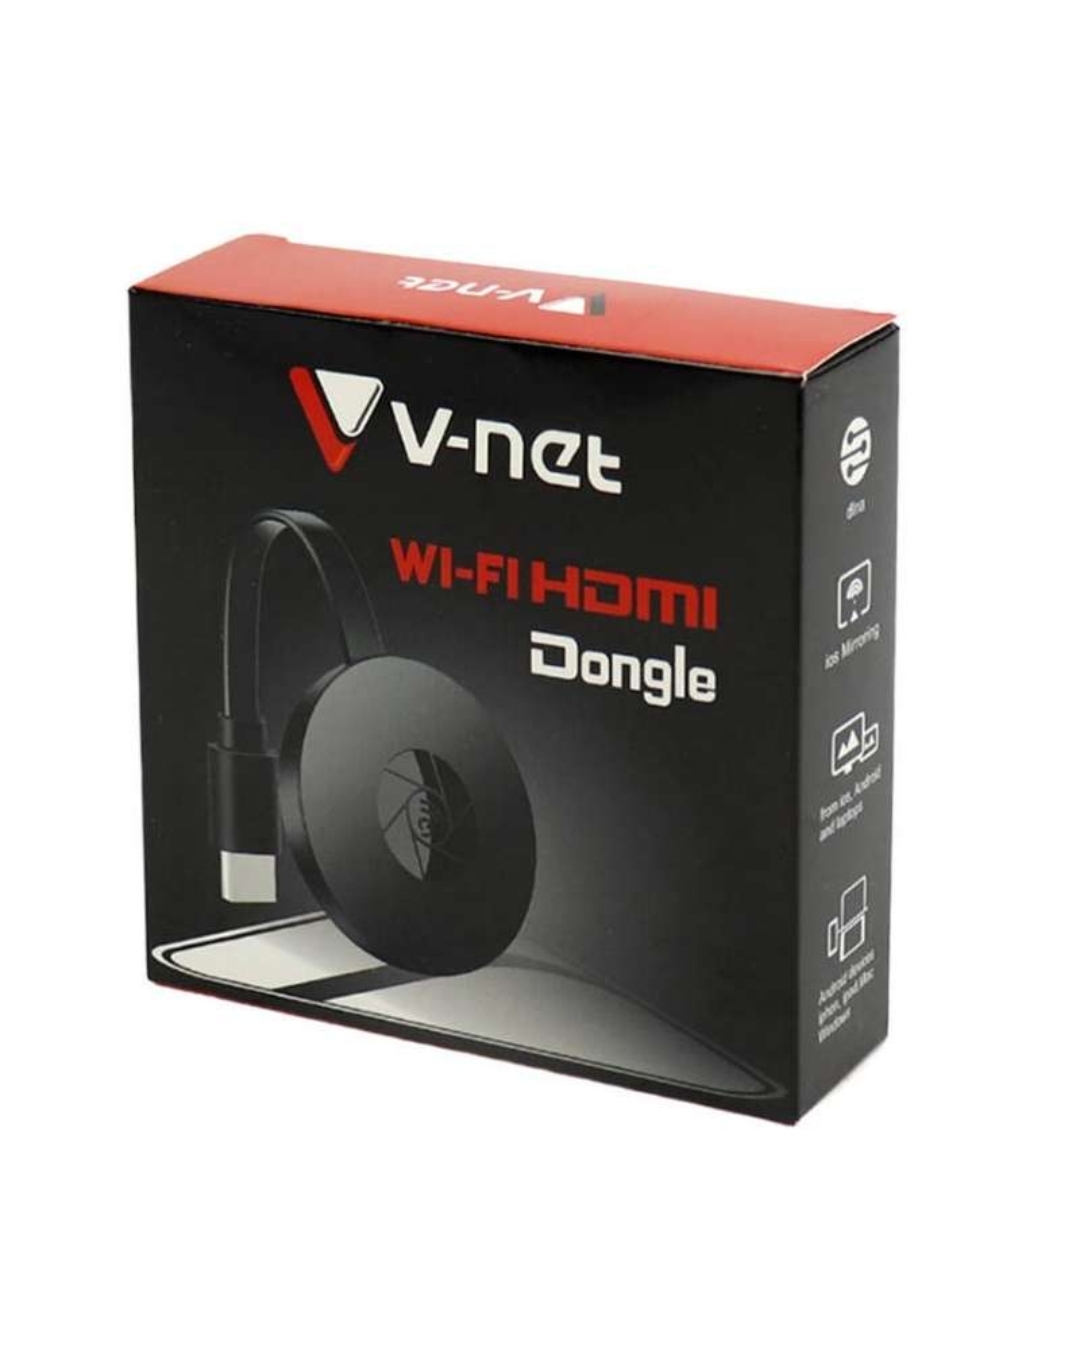 دانگل انتقال تصویر وی نت V-net V-DHWF1080 V-net V-DHWF1080 MiraScreen Wireless Display Dongle